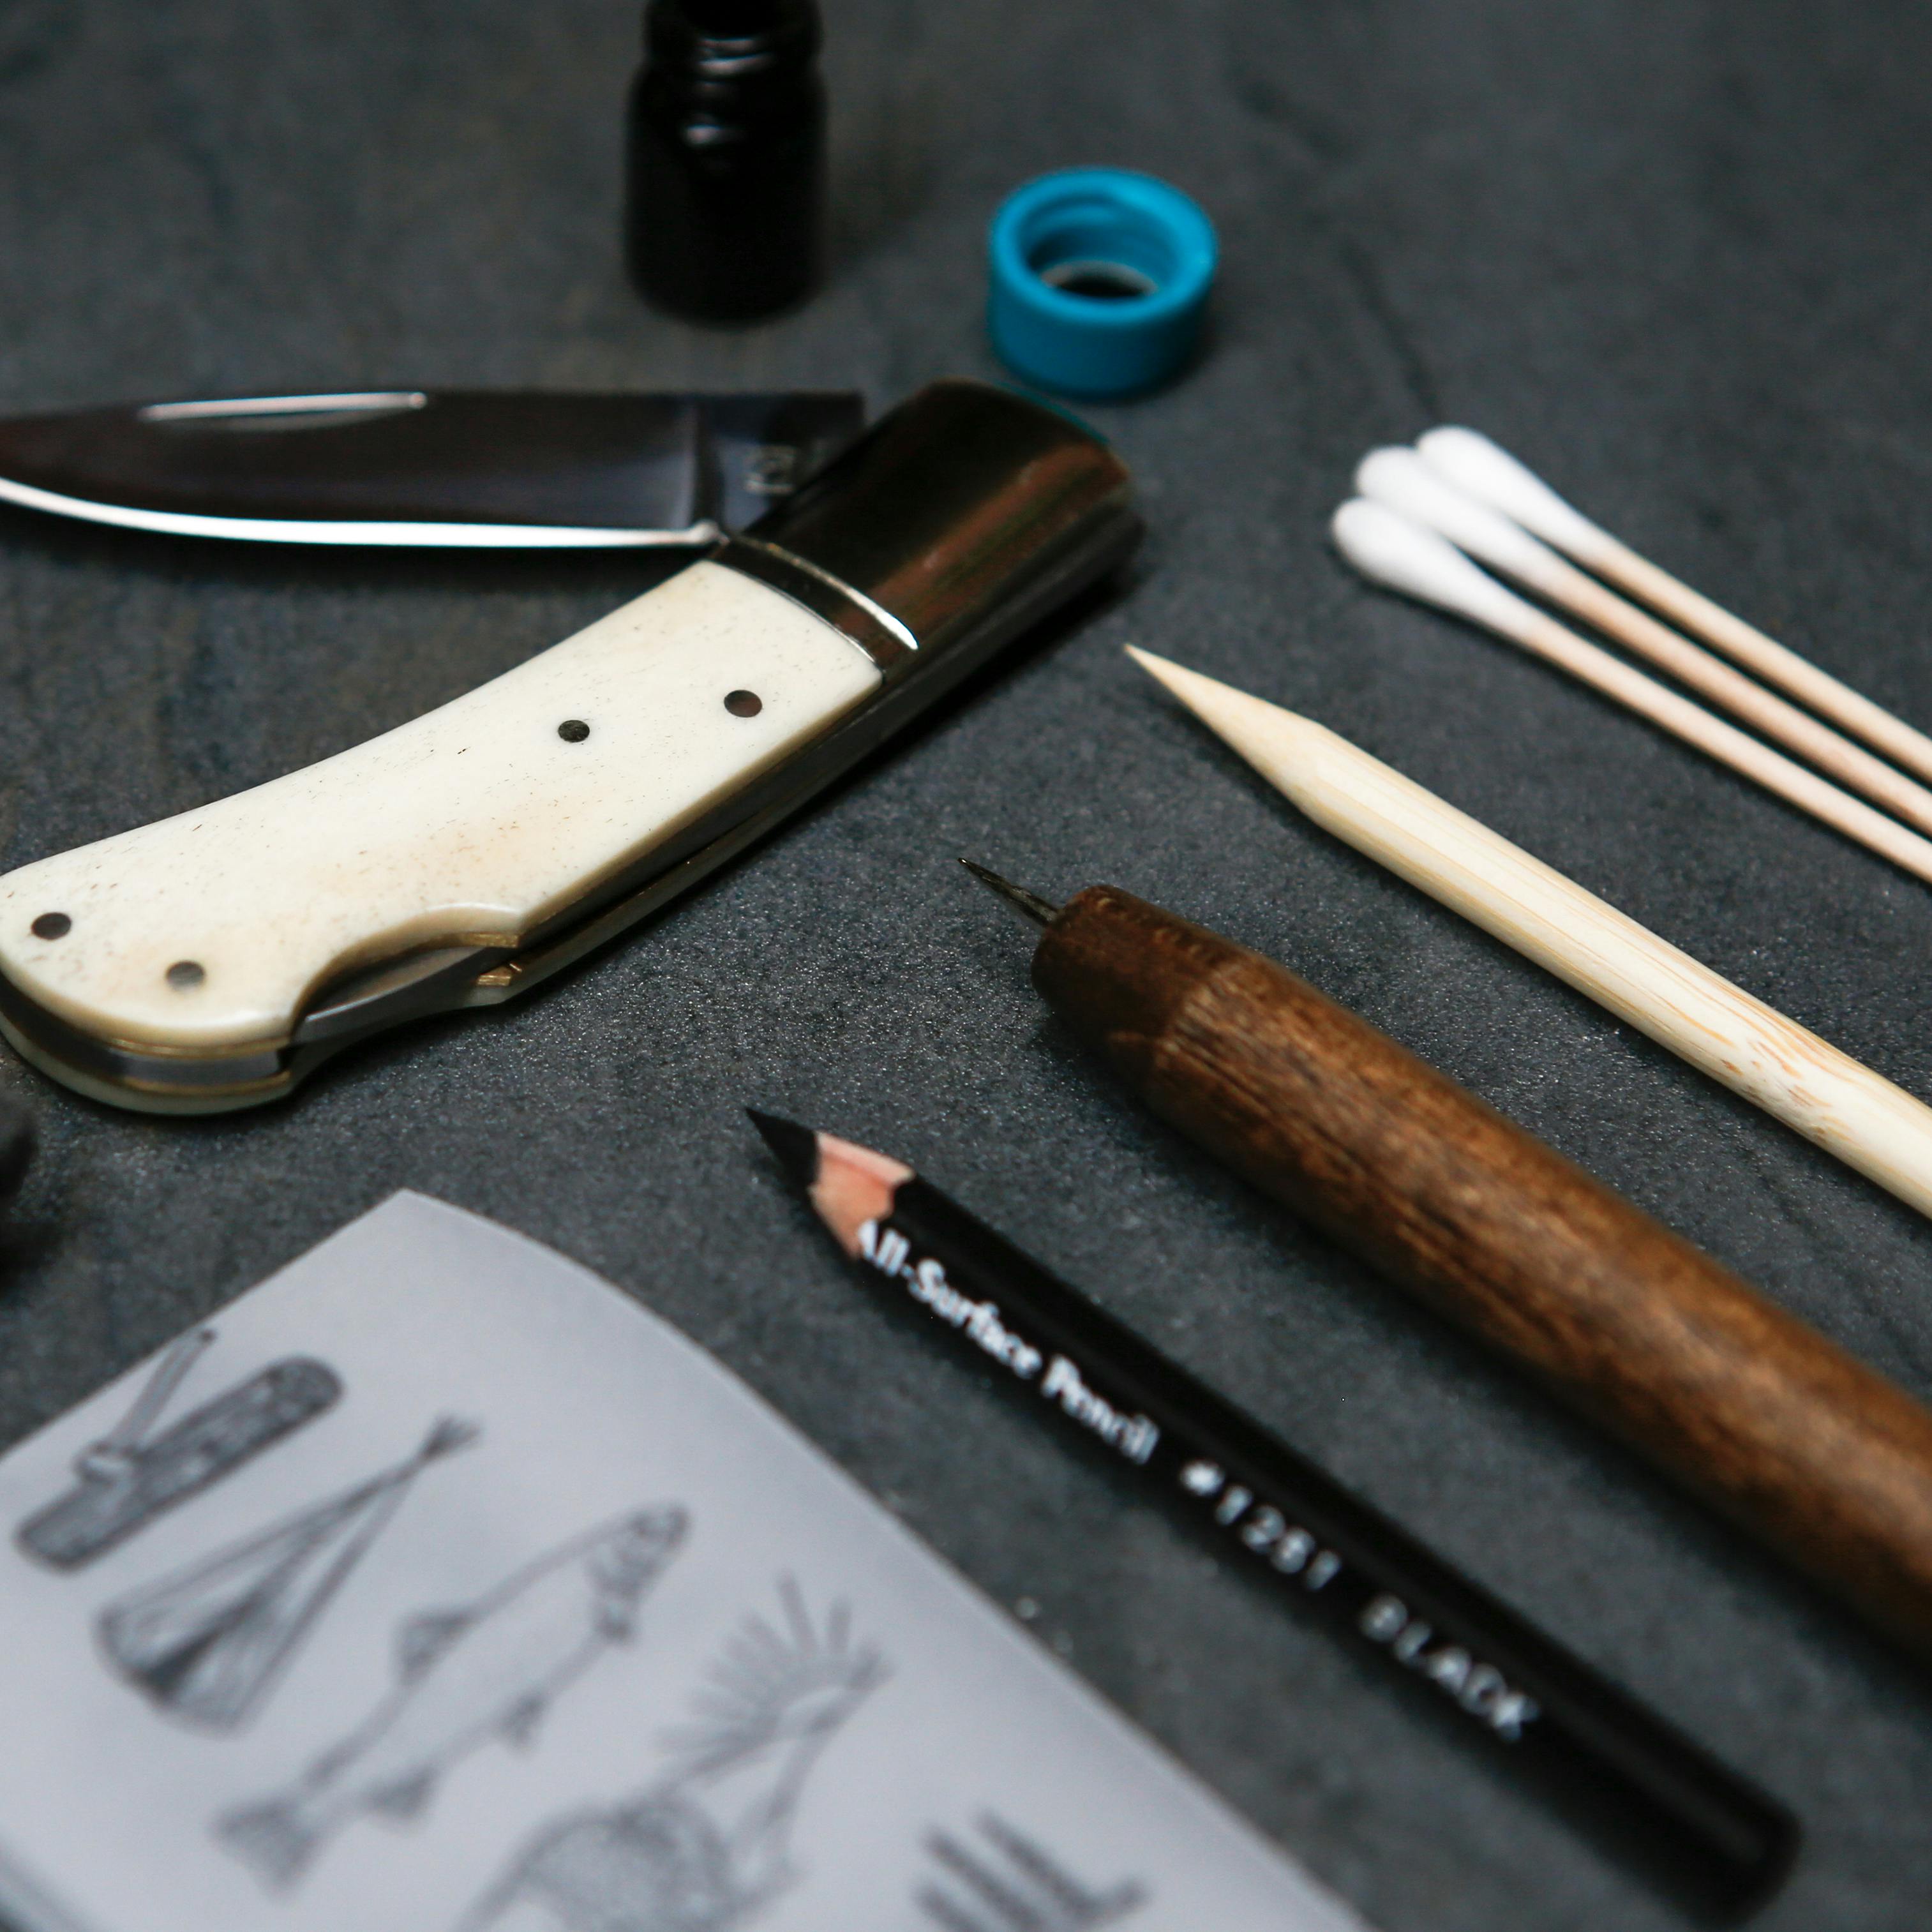 Mollyjogger Scrimshaw Knife Kit